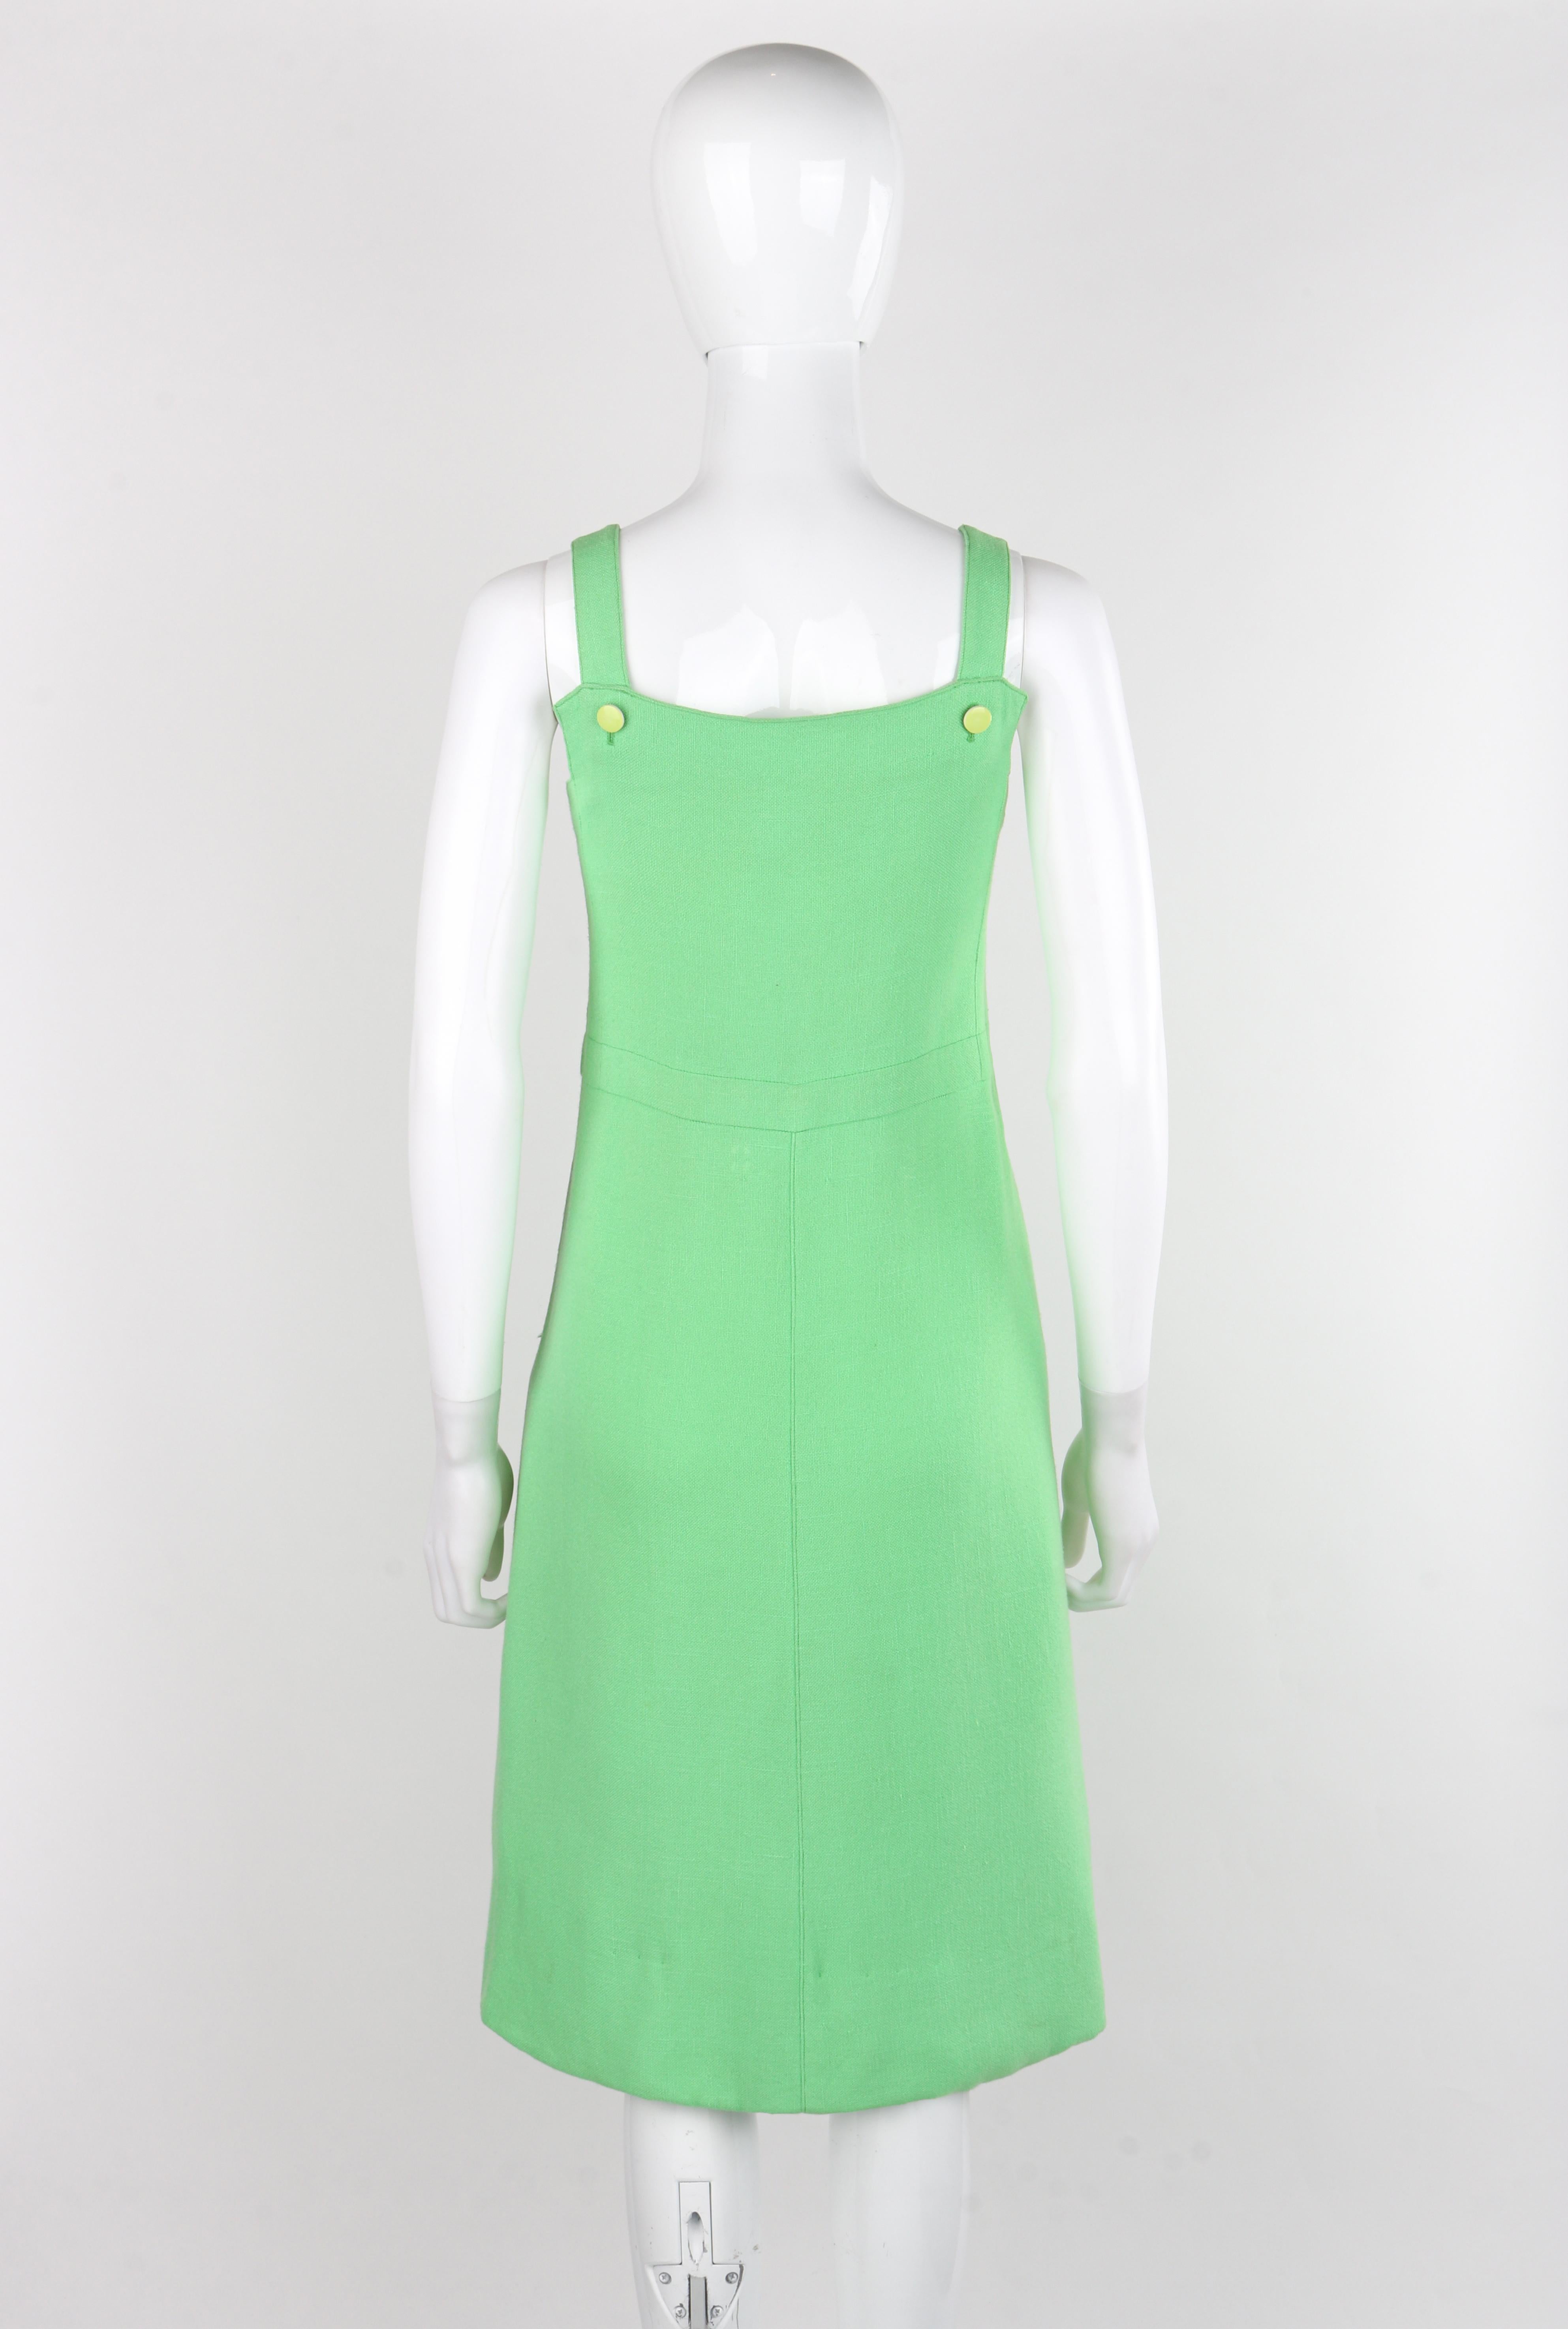 COURREGES Paris c.1960's Vtg Mint Green Tie Front Overall Midi Day Dress For Sale 2